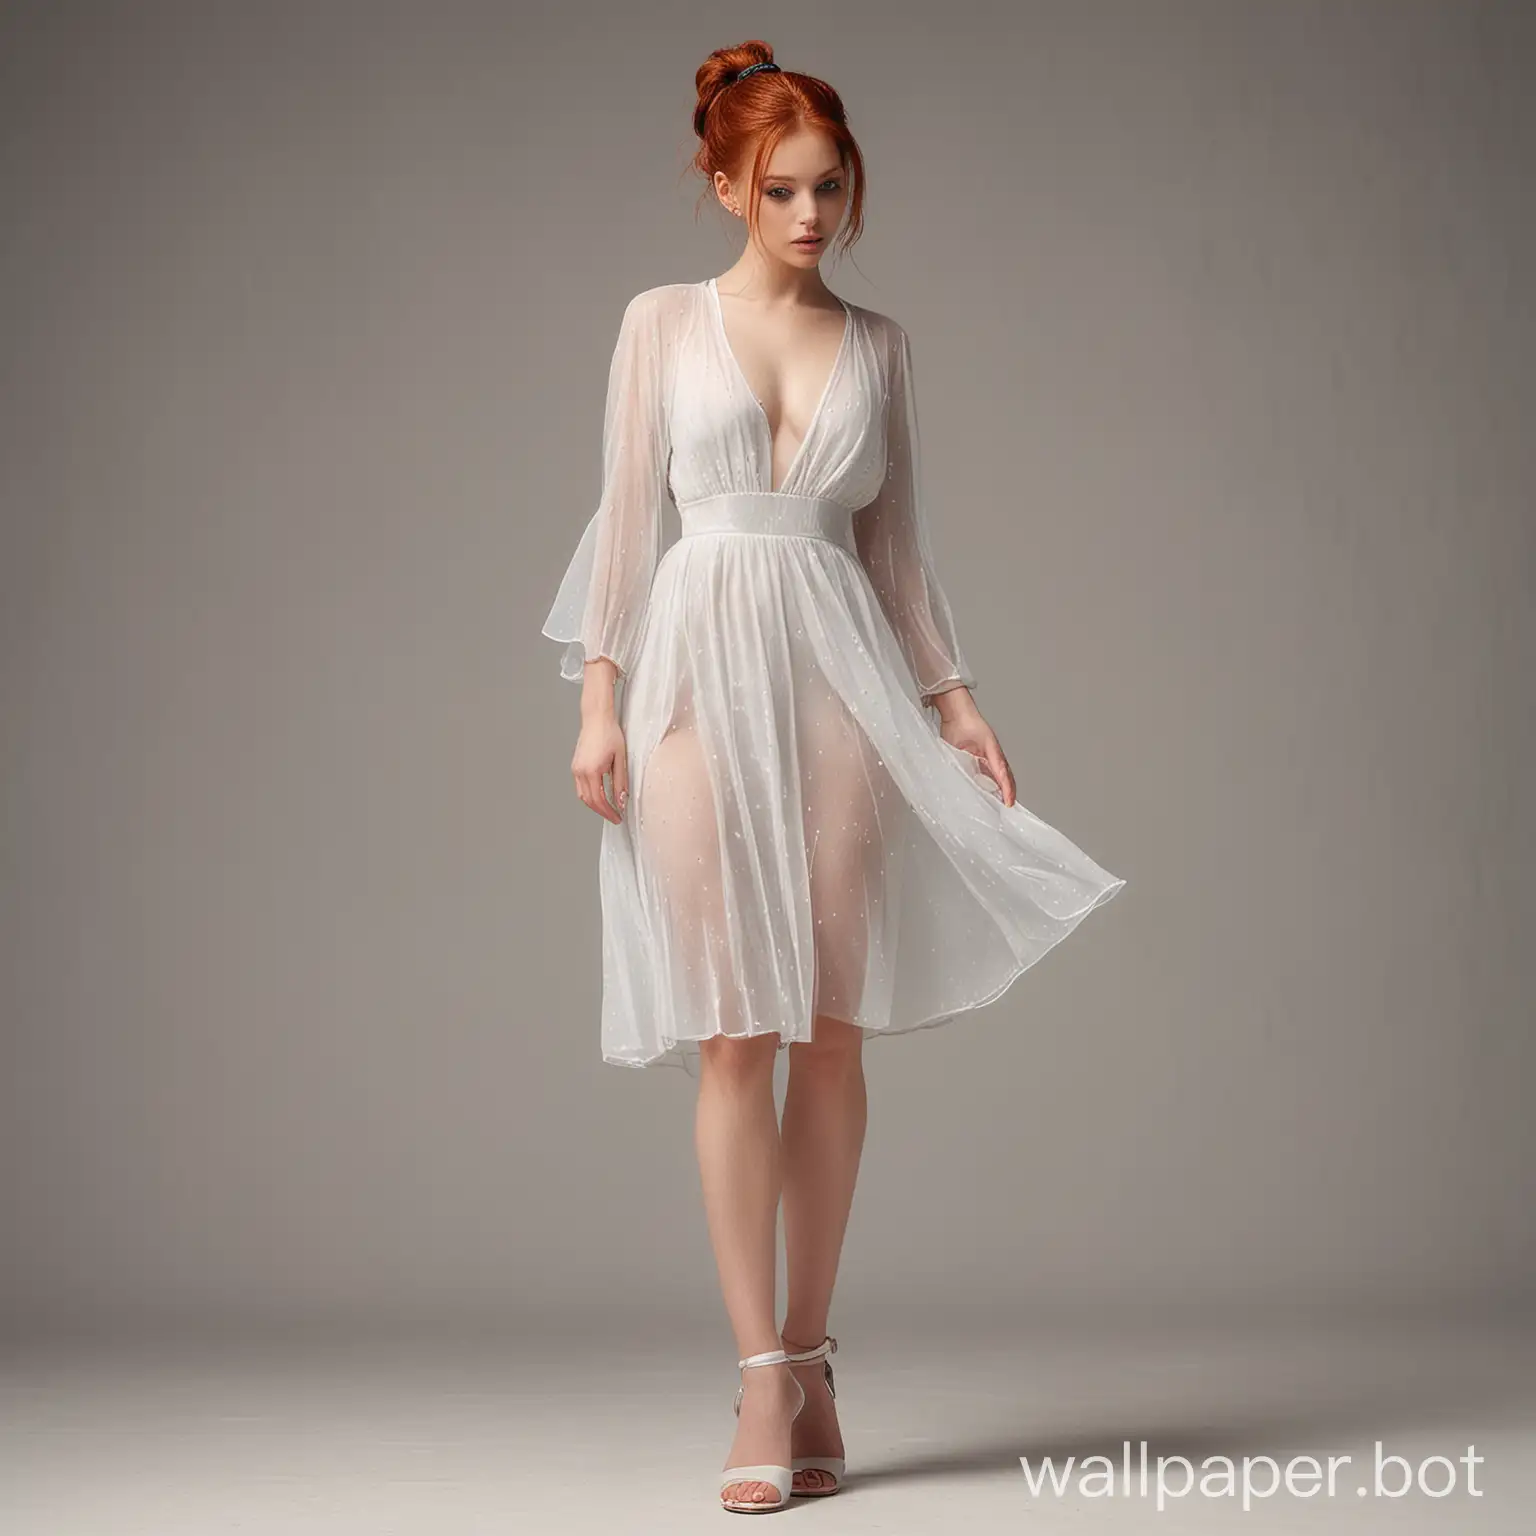 redhead female model, looks cute, very thin white sheer dress, 15cm heels, standing, big breast, ponytail hair